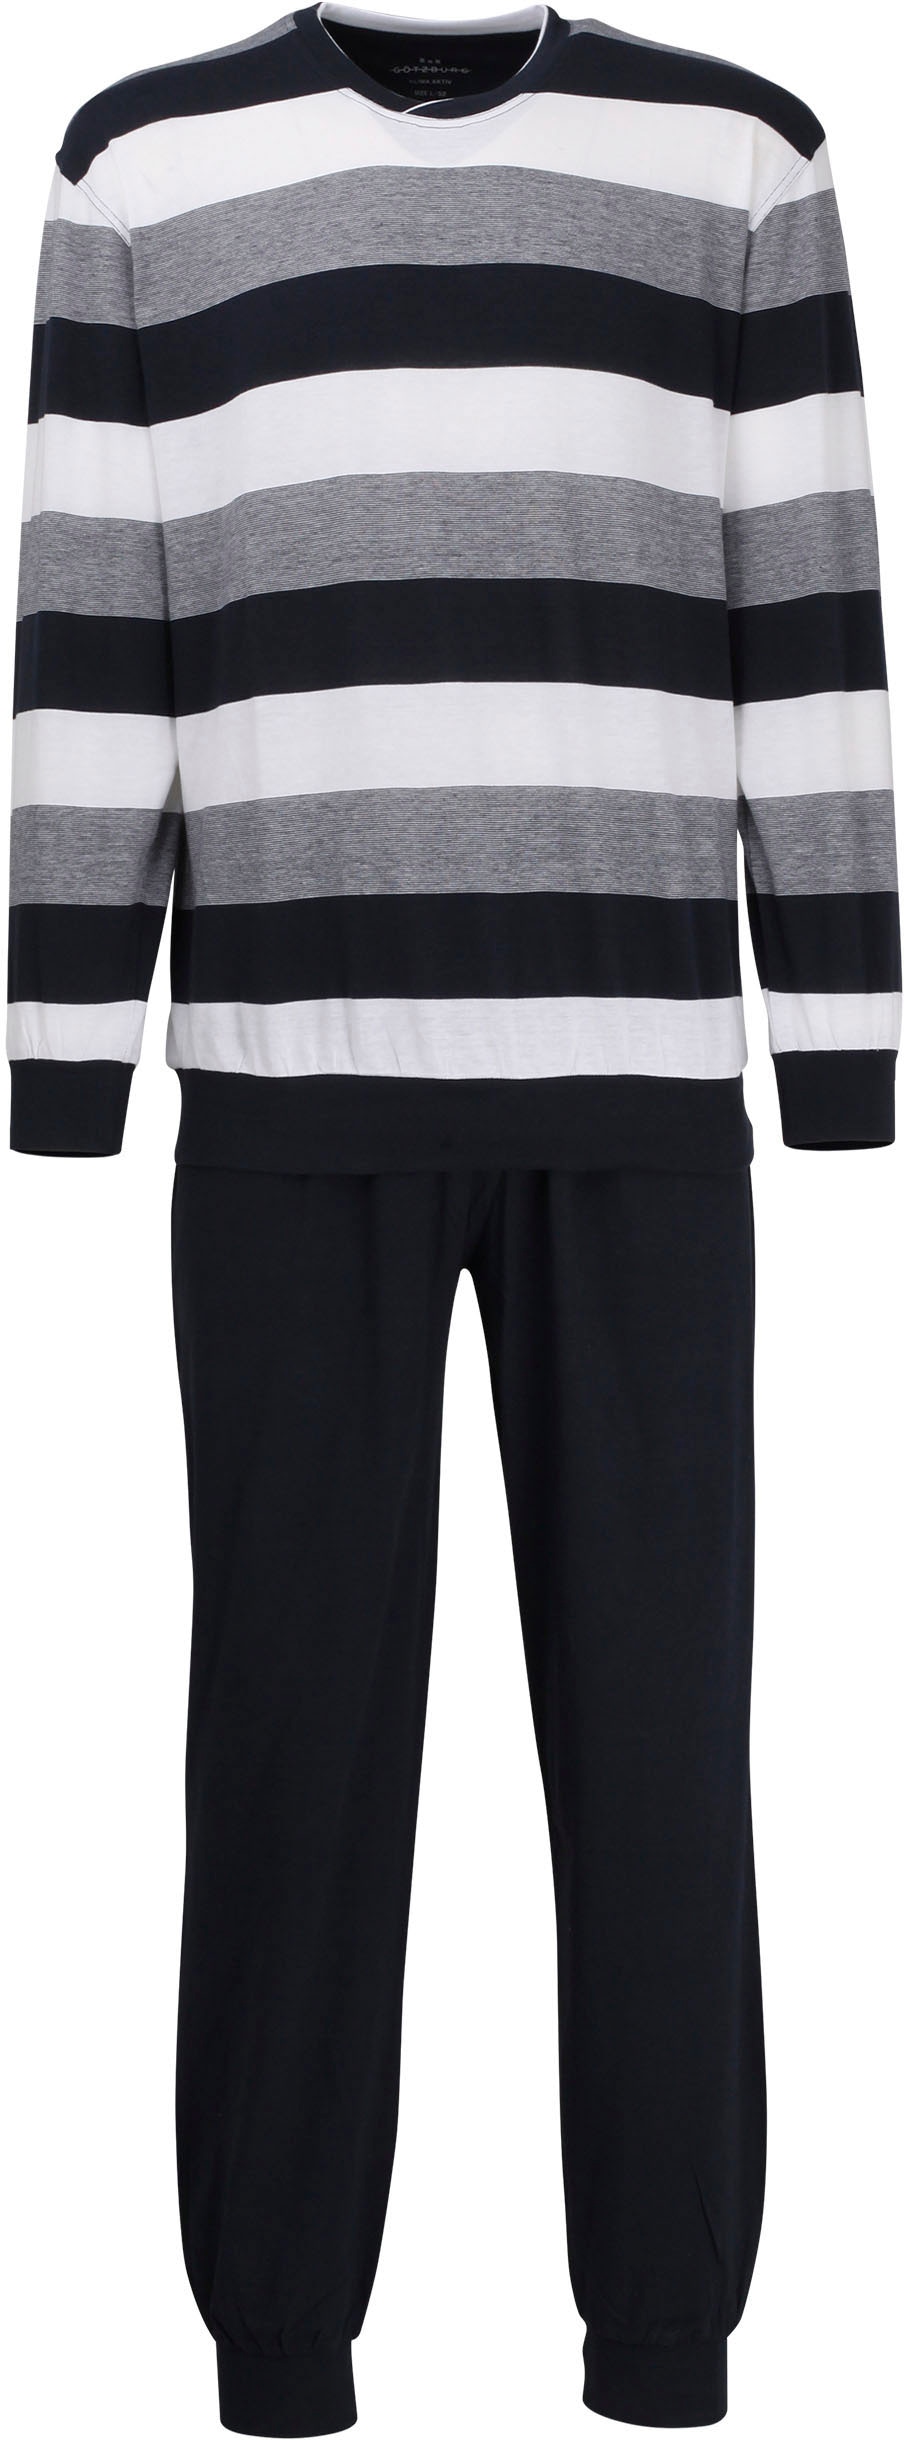 GÖTZBURG Pyjama »Upper East«, (2 tlg.), mit breitem Streifen-Design